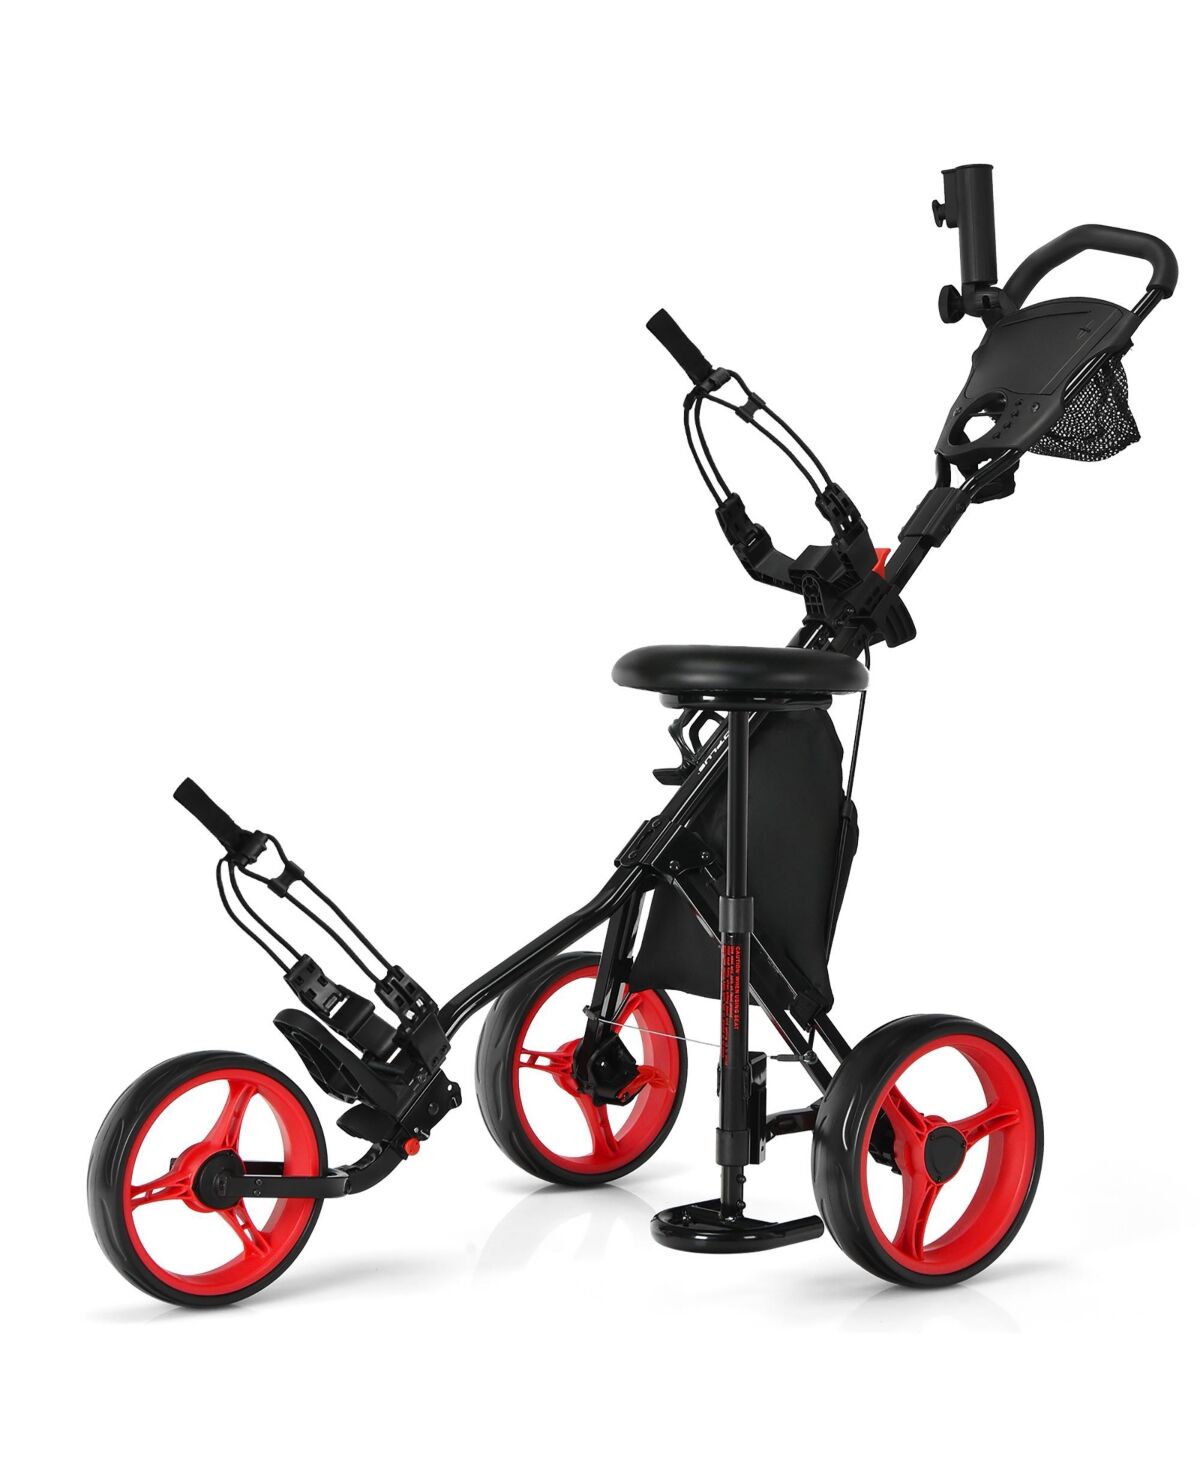 Costway Folding 3 Wheels Golf Push Cart W/Seat Scoreboard Adjustable Handle - Red